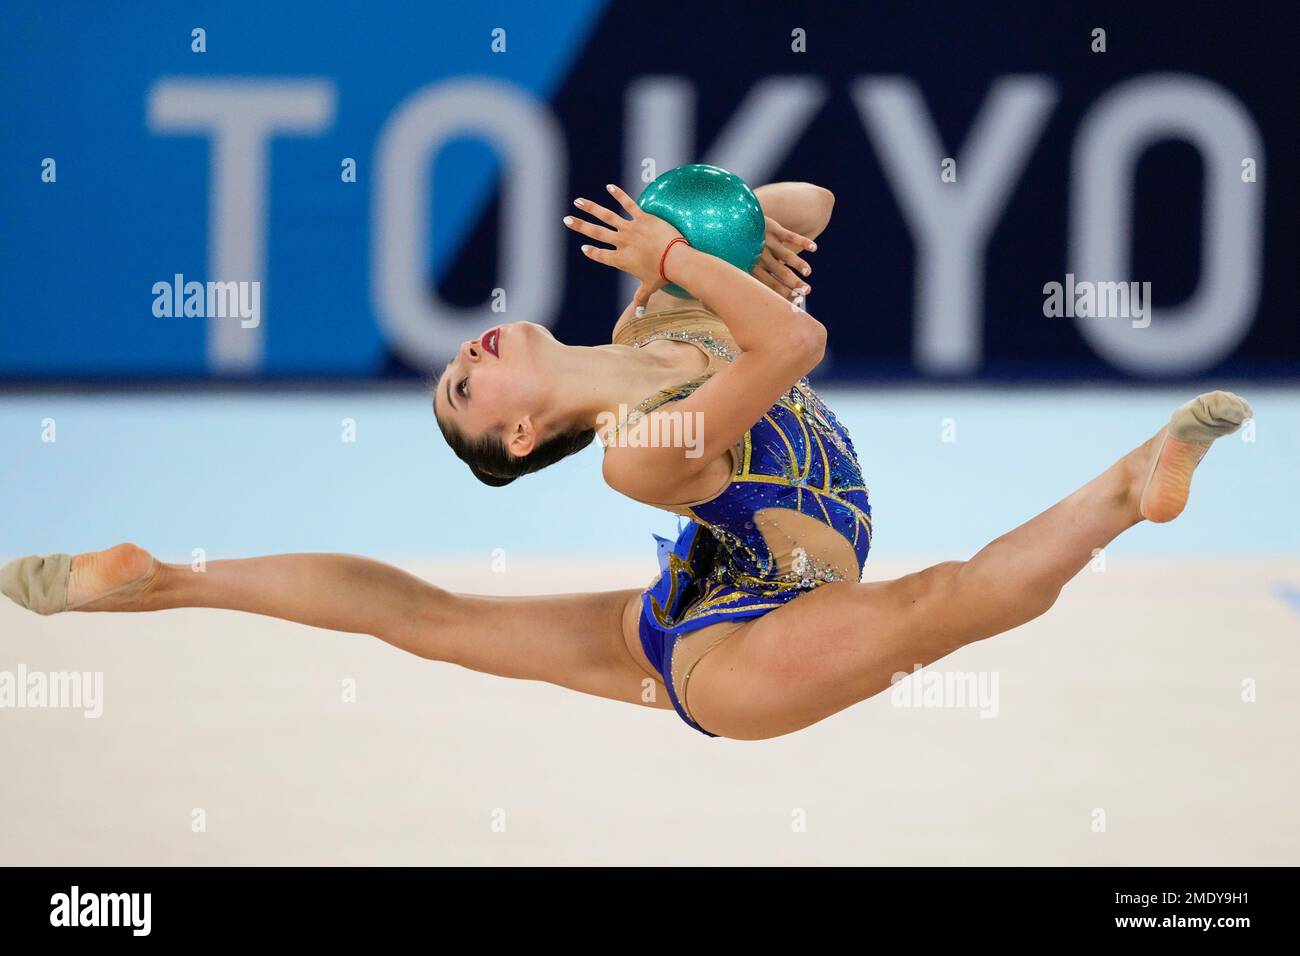 Milena Baldassarri, of Italy, performs during the rhythmic gymnastics individual all-around final at the 2020 Summer Olympics, Saturday, Aug